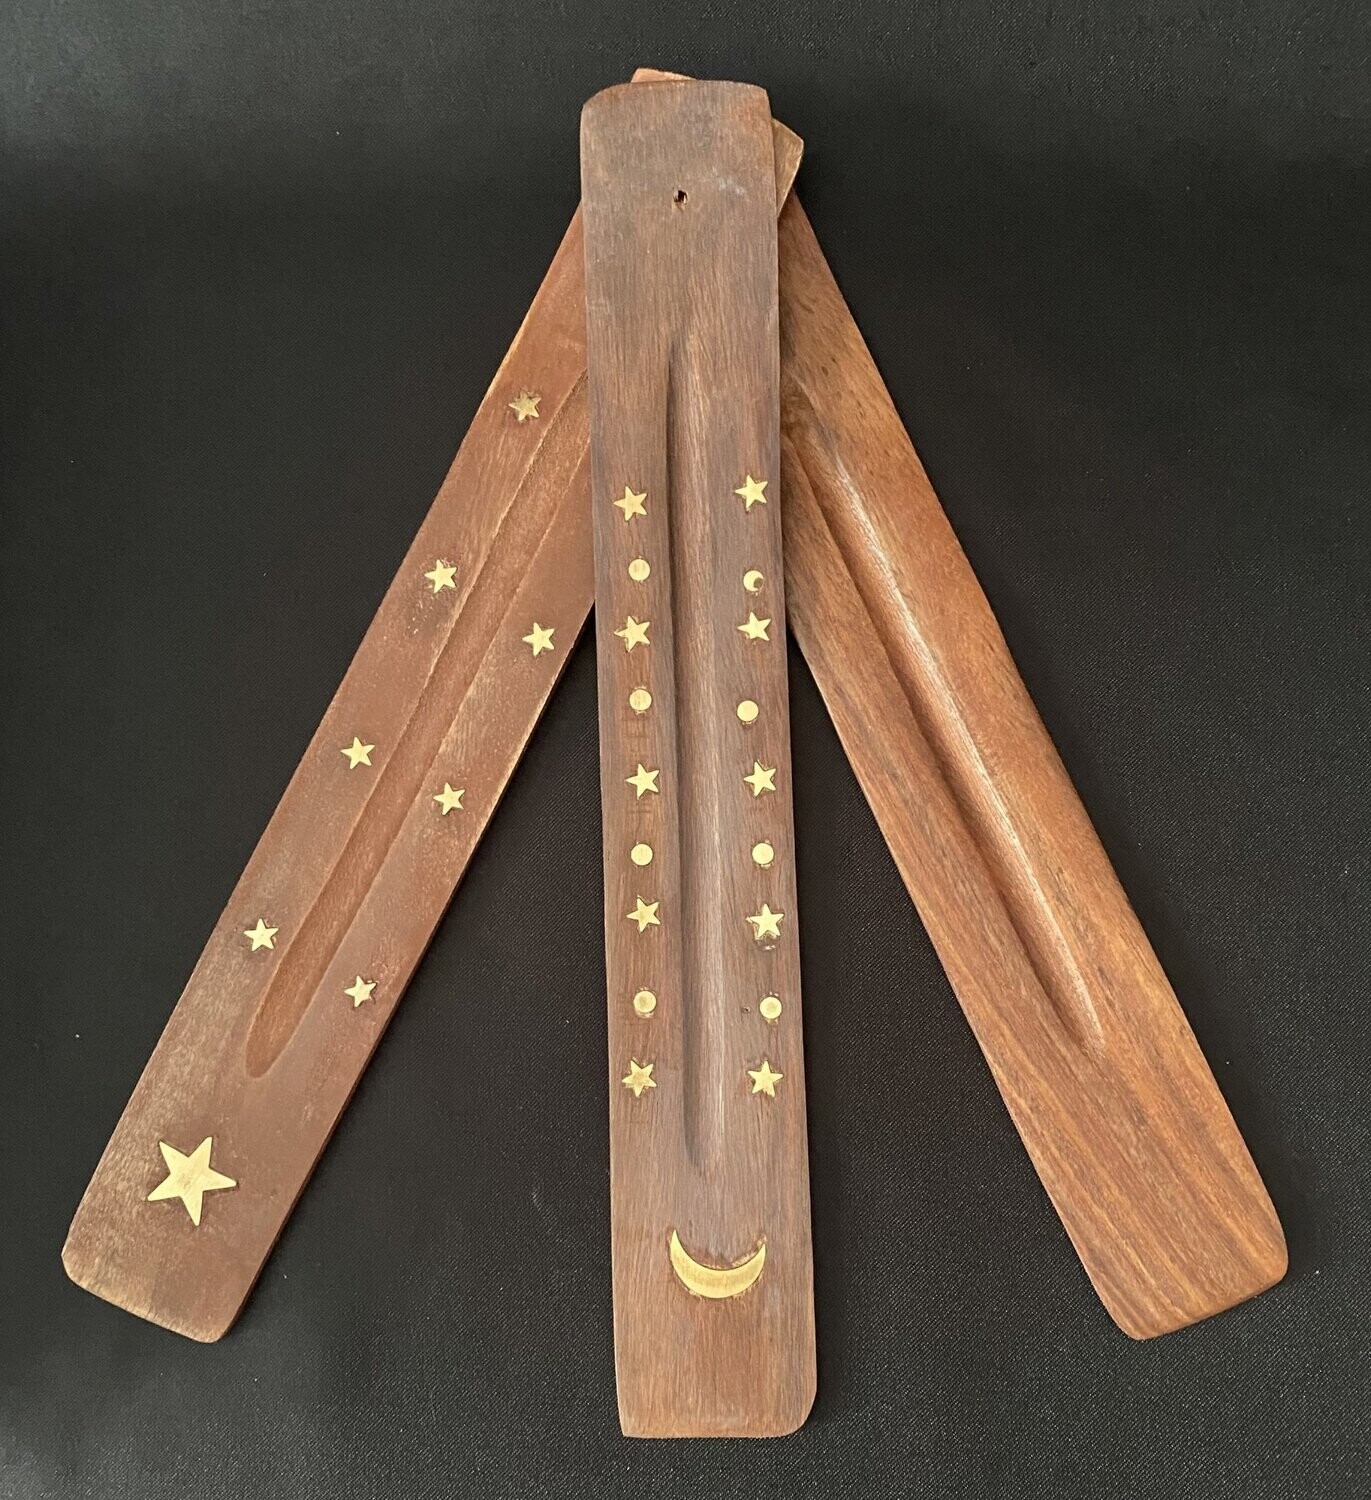 Incense Sticks Holder and Ash Tray - Star design